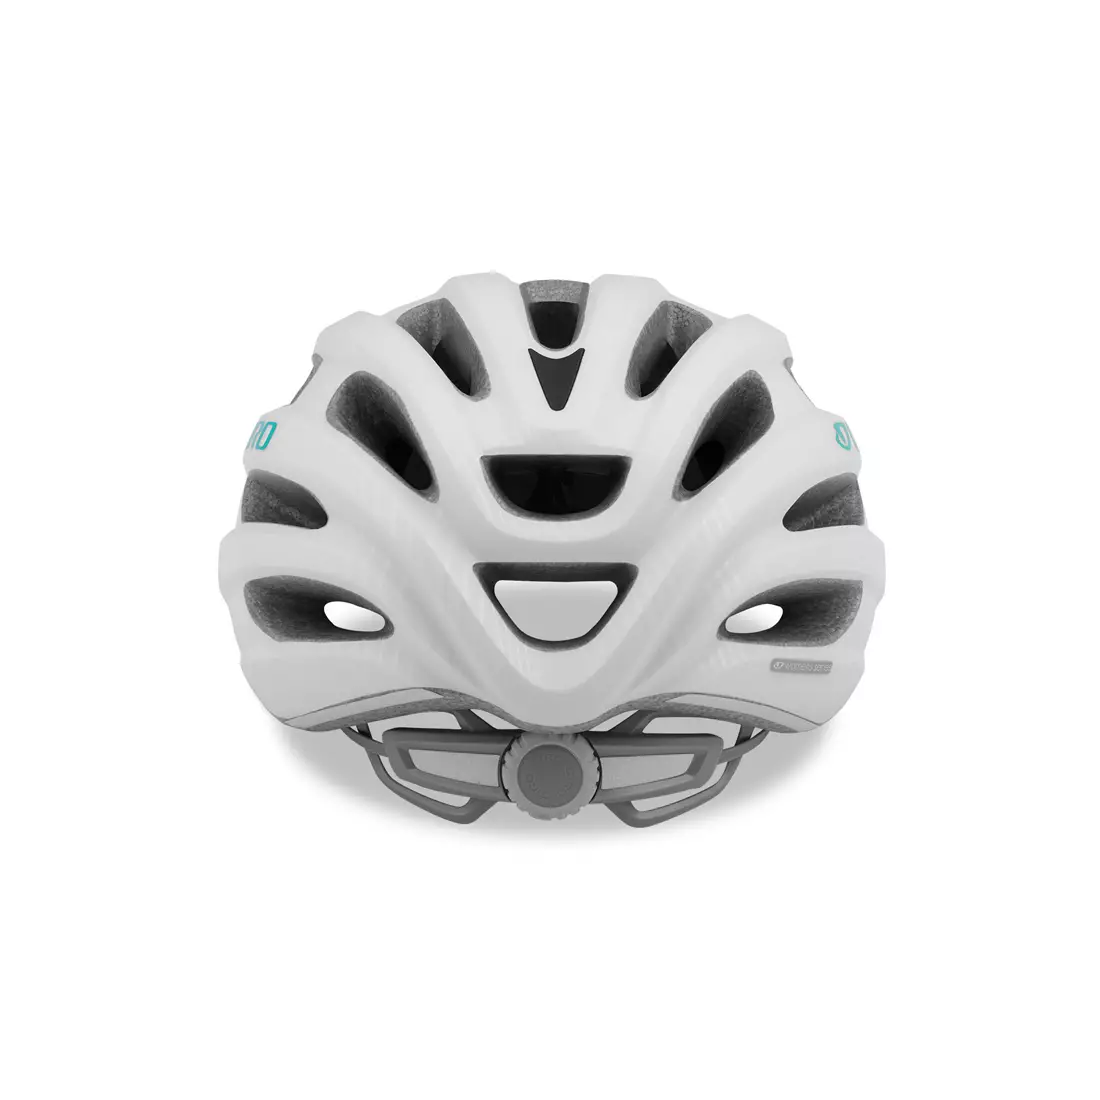 Cyklistická helma GIRO VASONA matte white silver 